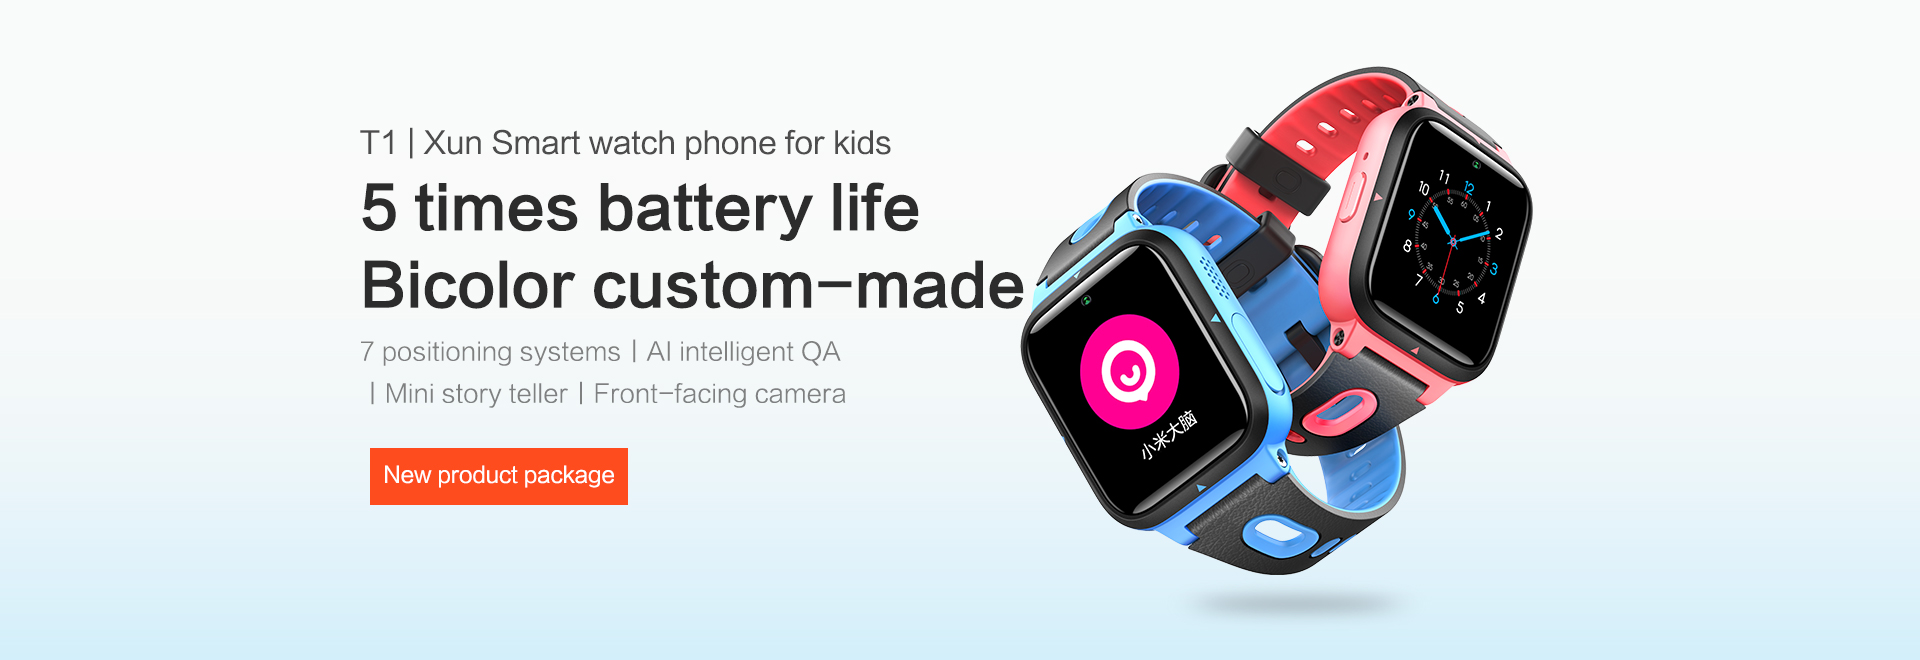 T1 | Xun Smart watch phone for kids